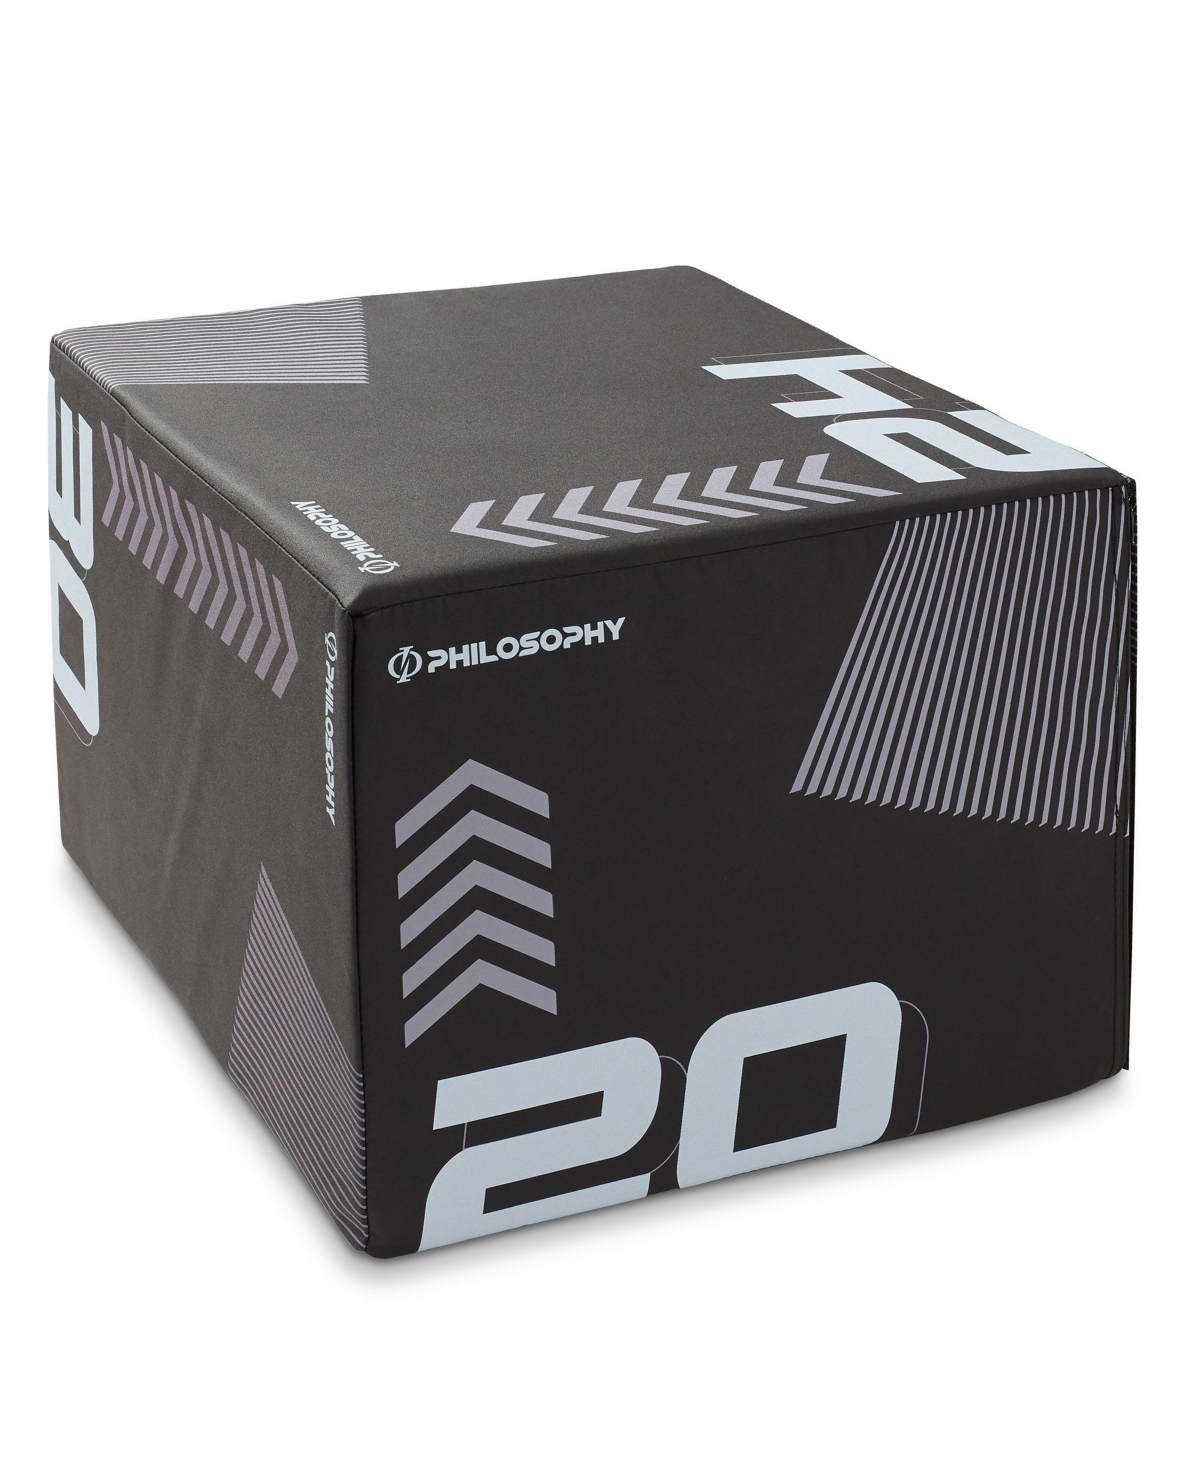 3 in 1 Soft Foam Plyometric Box - 20" x 24" x 30" Jumping Plyo Box for Training and Conditioning - Black